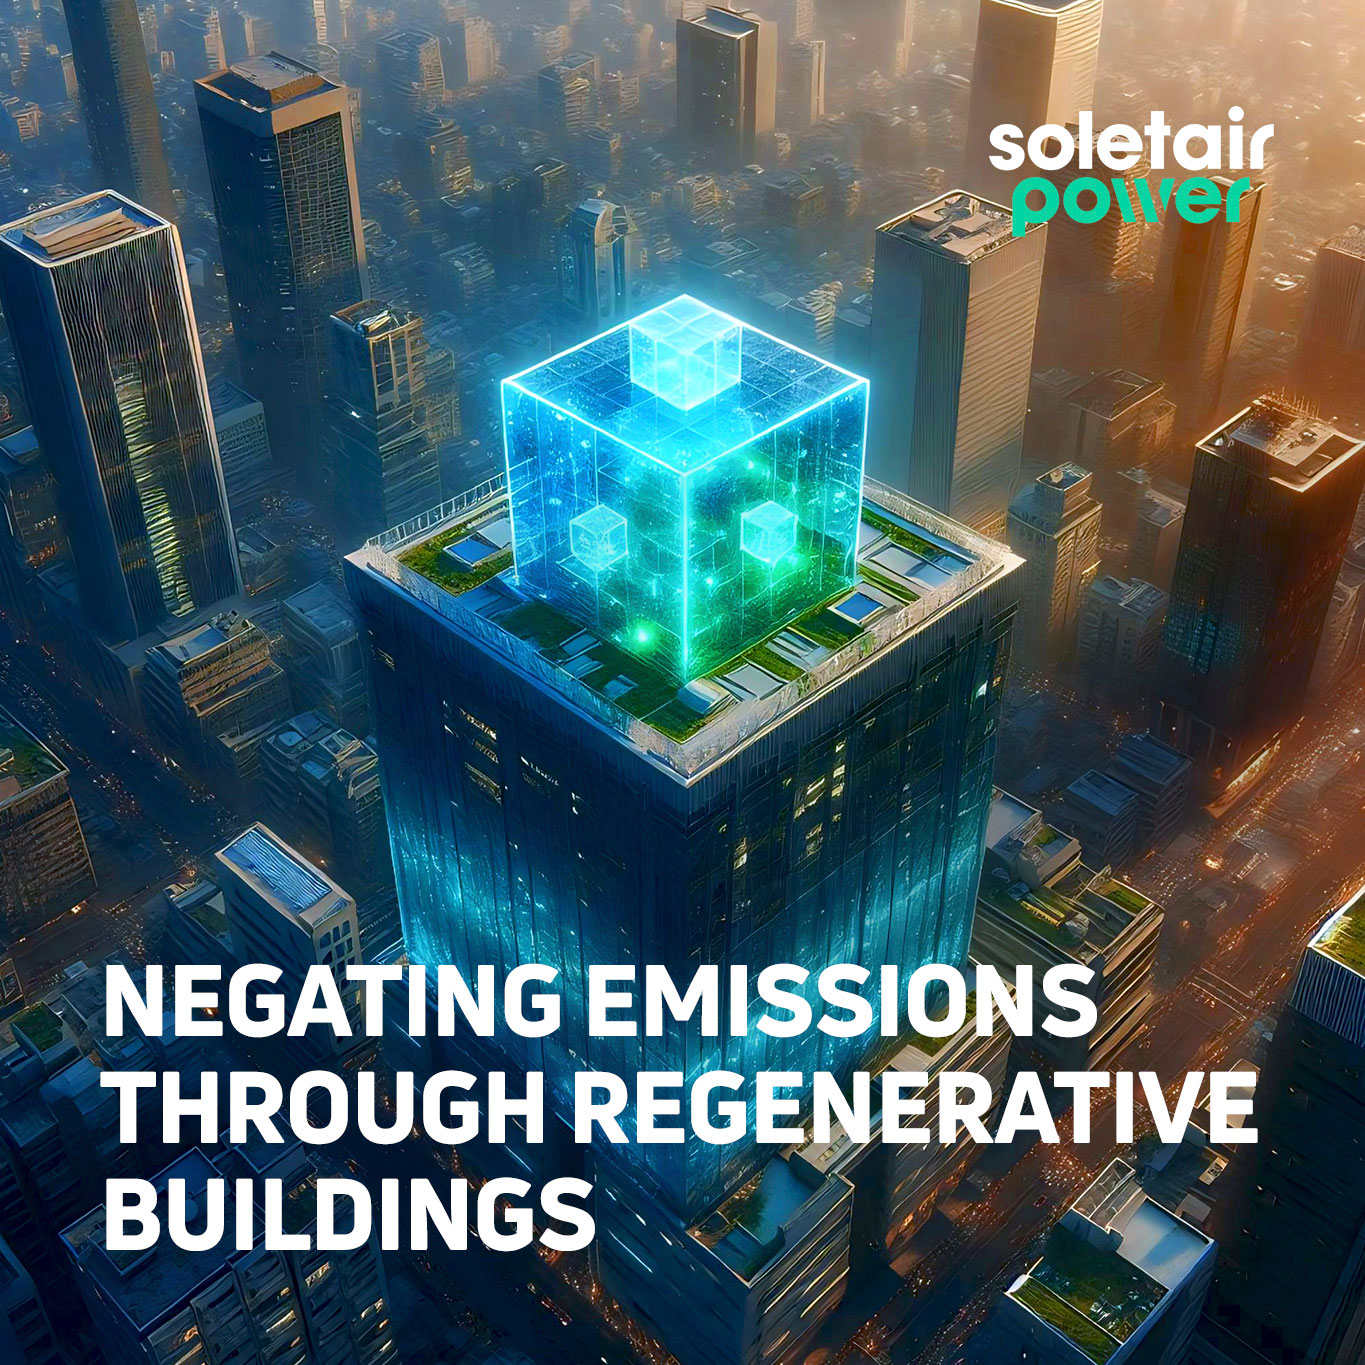 AI-Image-of-Regenerative-Building-Capturing-CO2-Soletair-Power